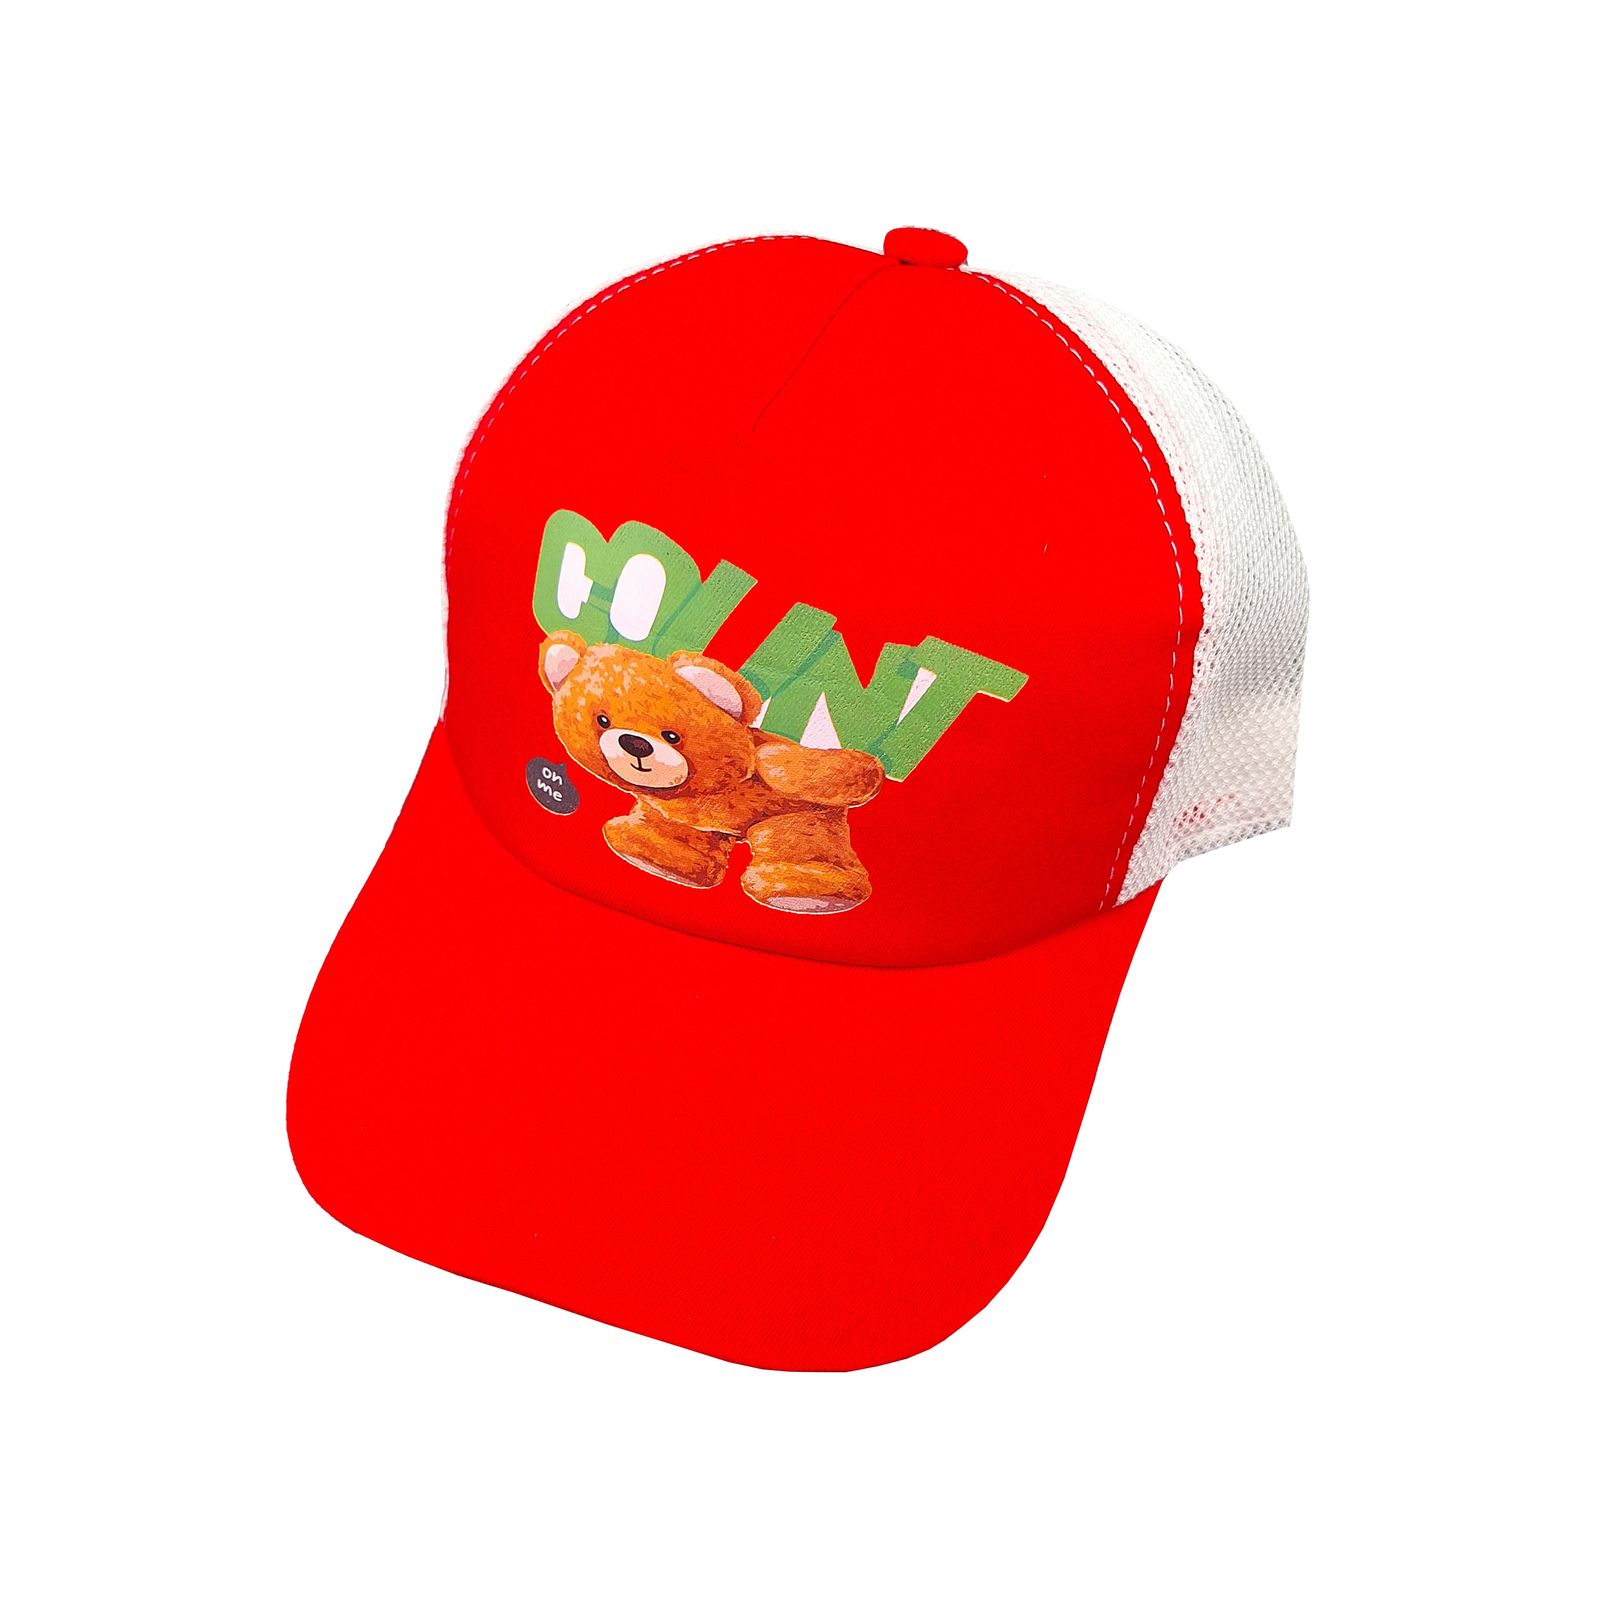 کلاه کپ بچگانه مدل COUNT کد 1212 رنگ قرمز -  - 3